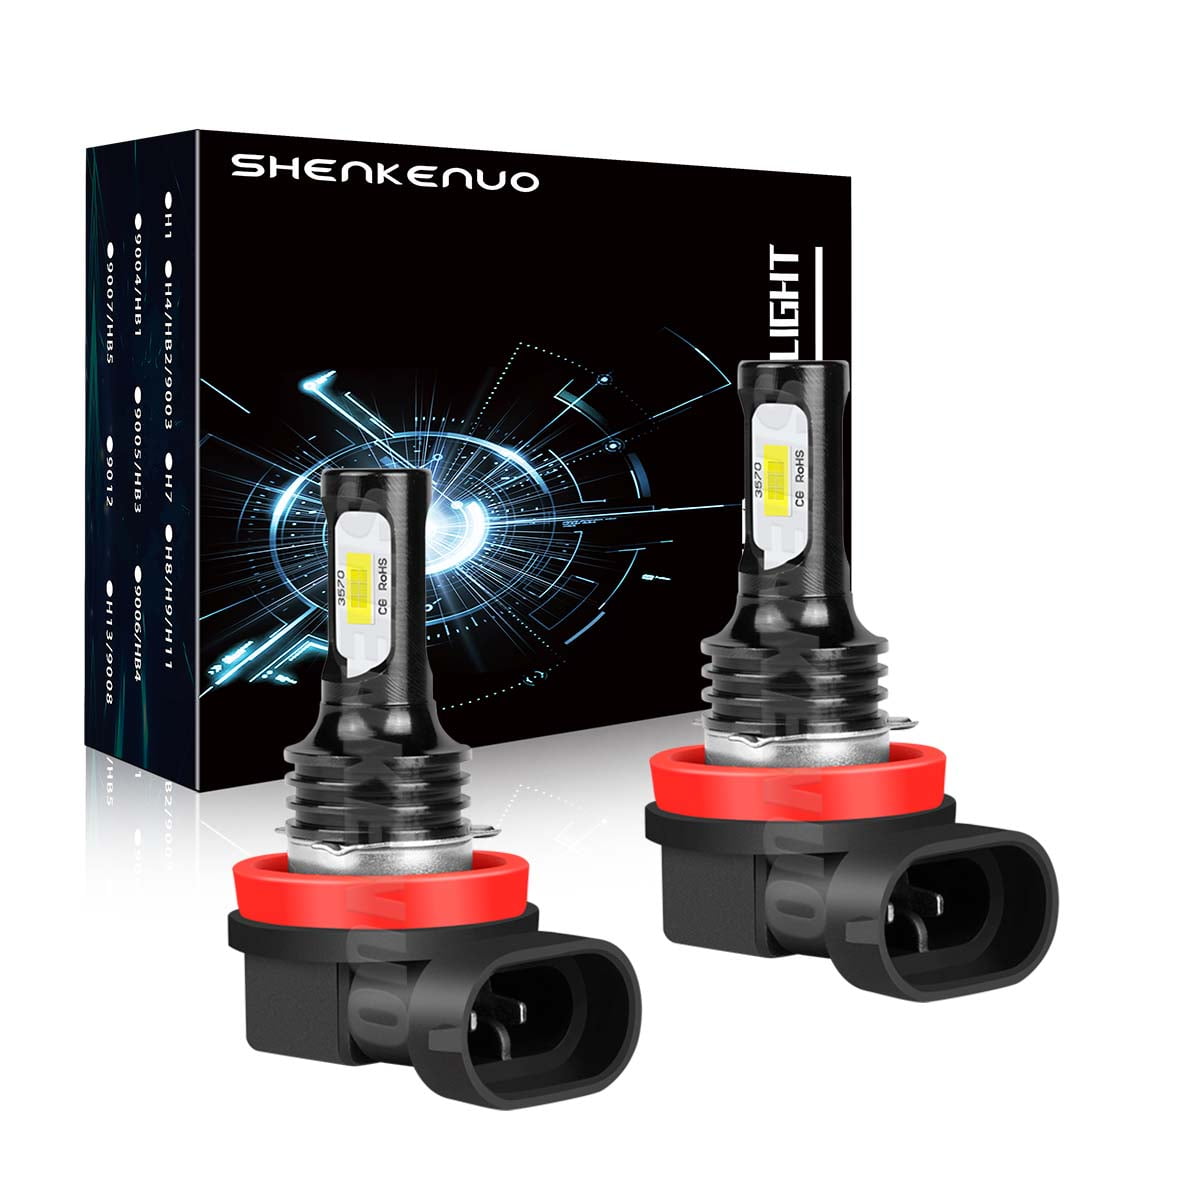 LED bulb H11 Special for Lenticular Headlights - 10,000 Lumens.